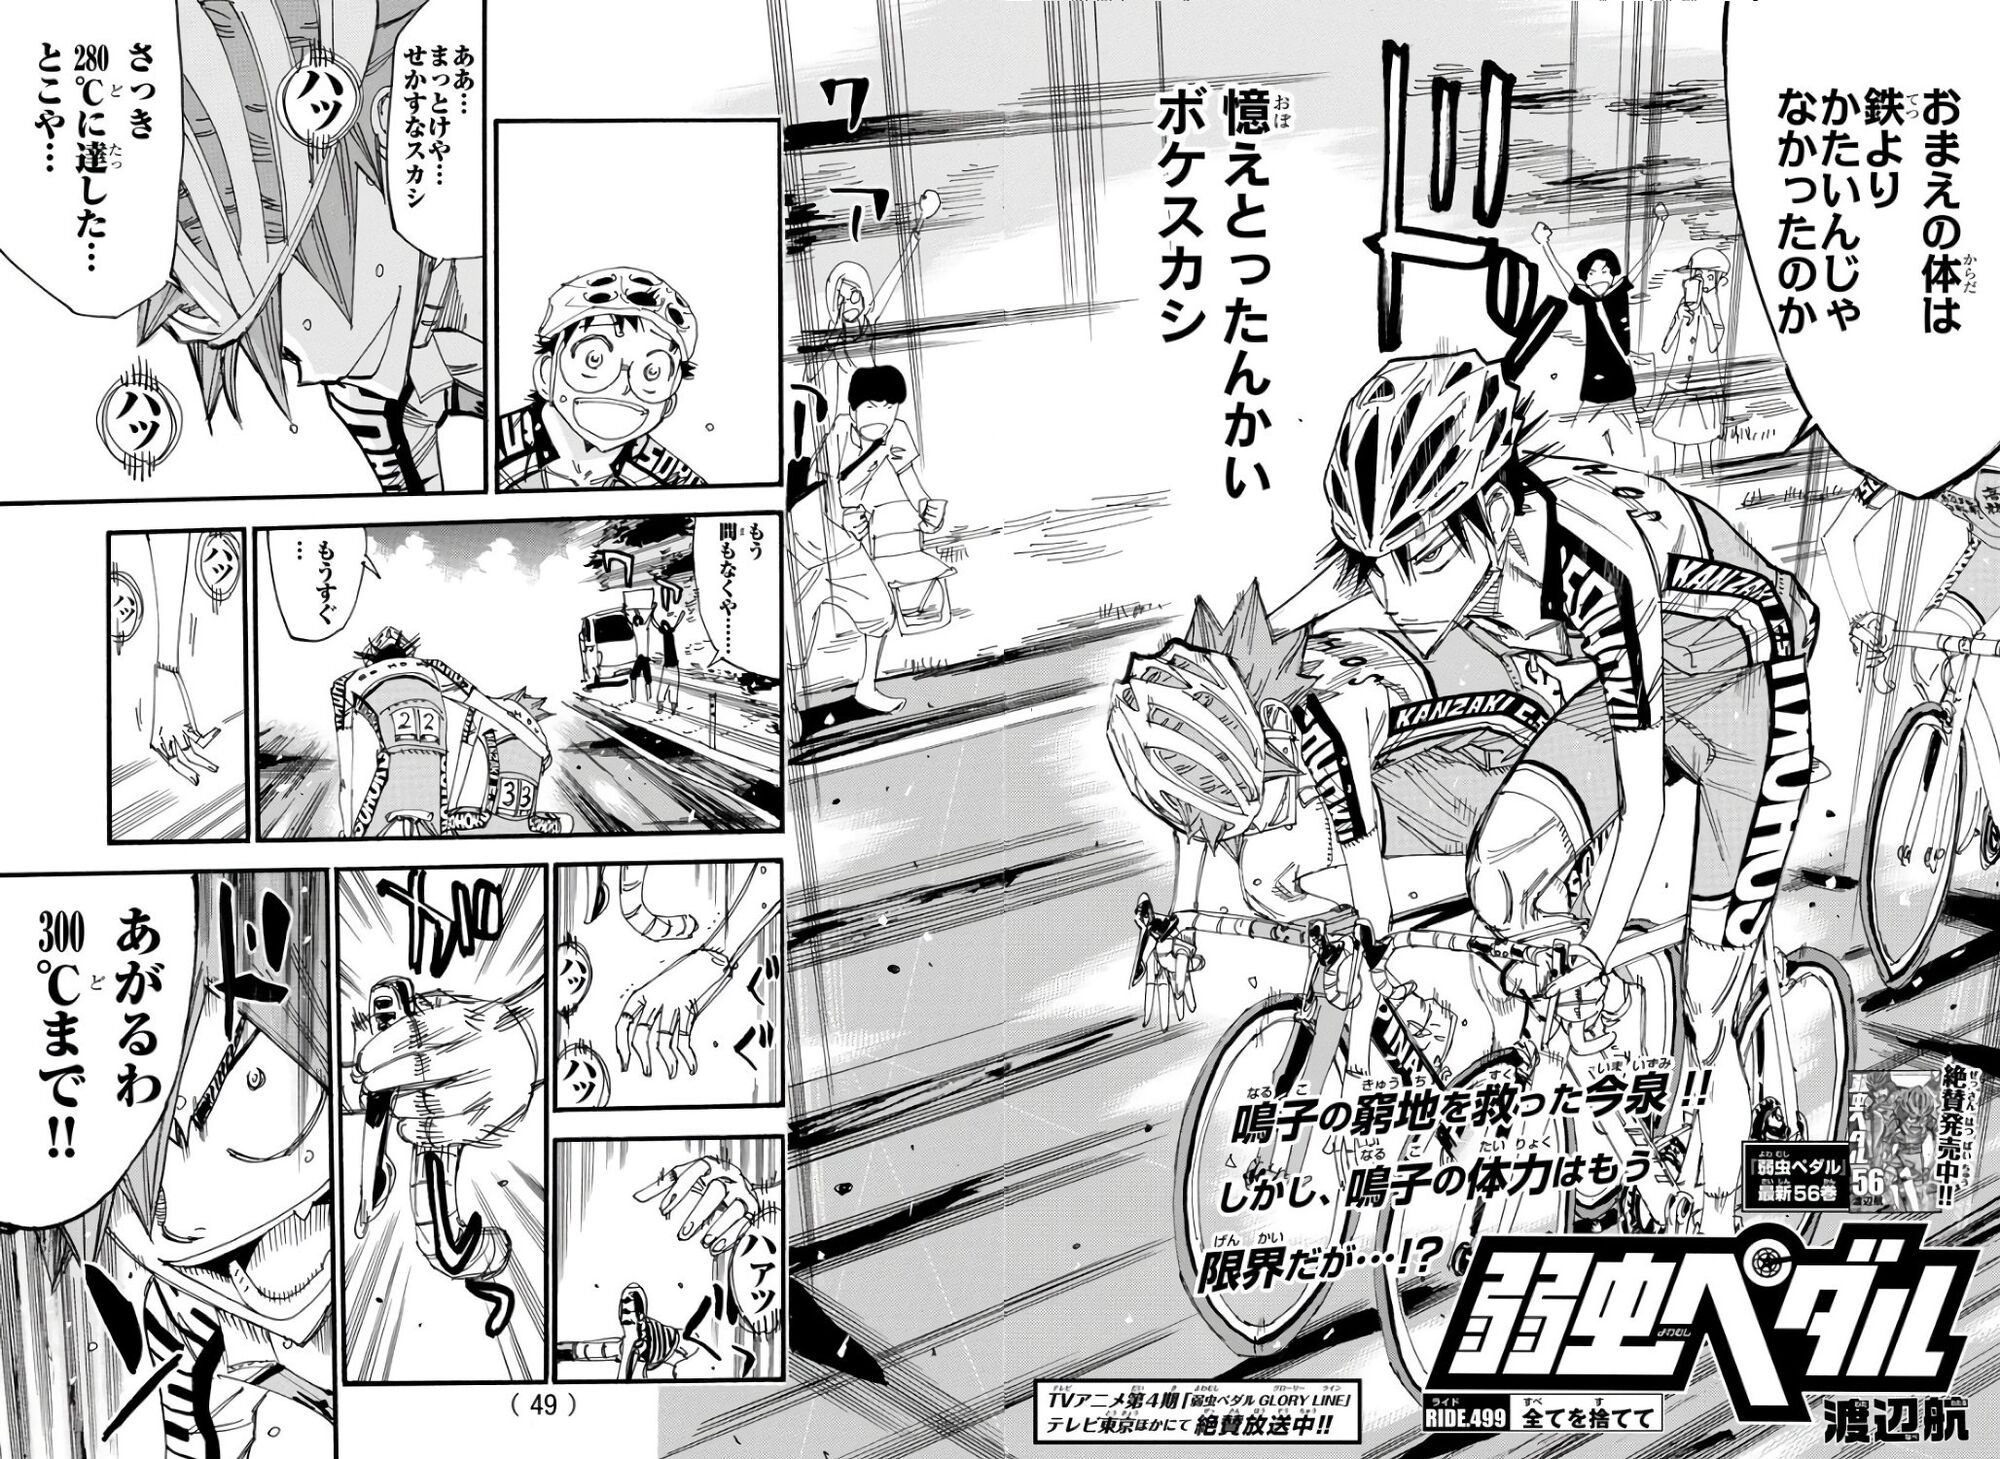 Chapter 499 Yowamushi Pedal Go Wiki Fandom